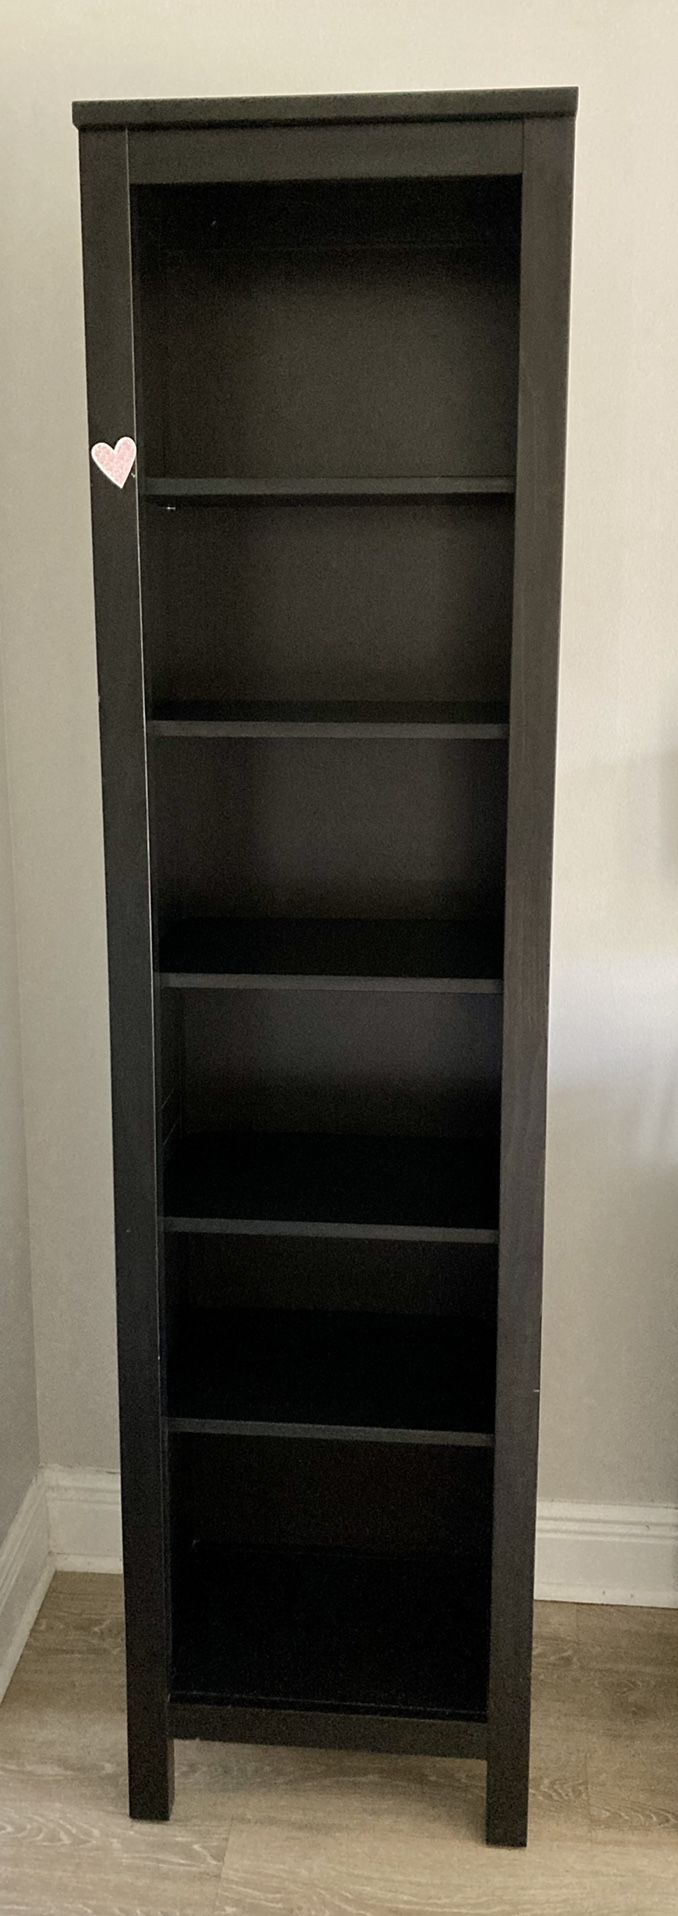 Ikea Black Bookcase 